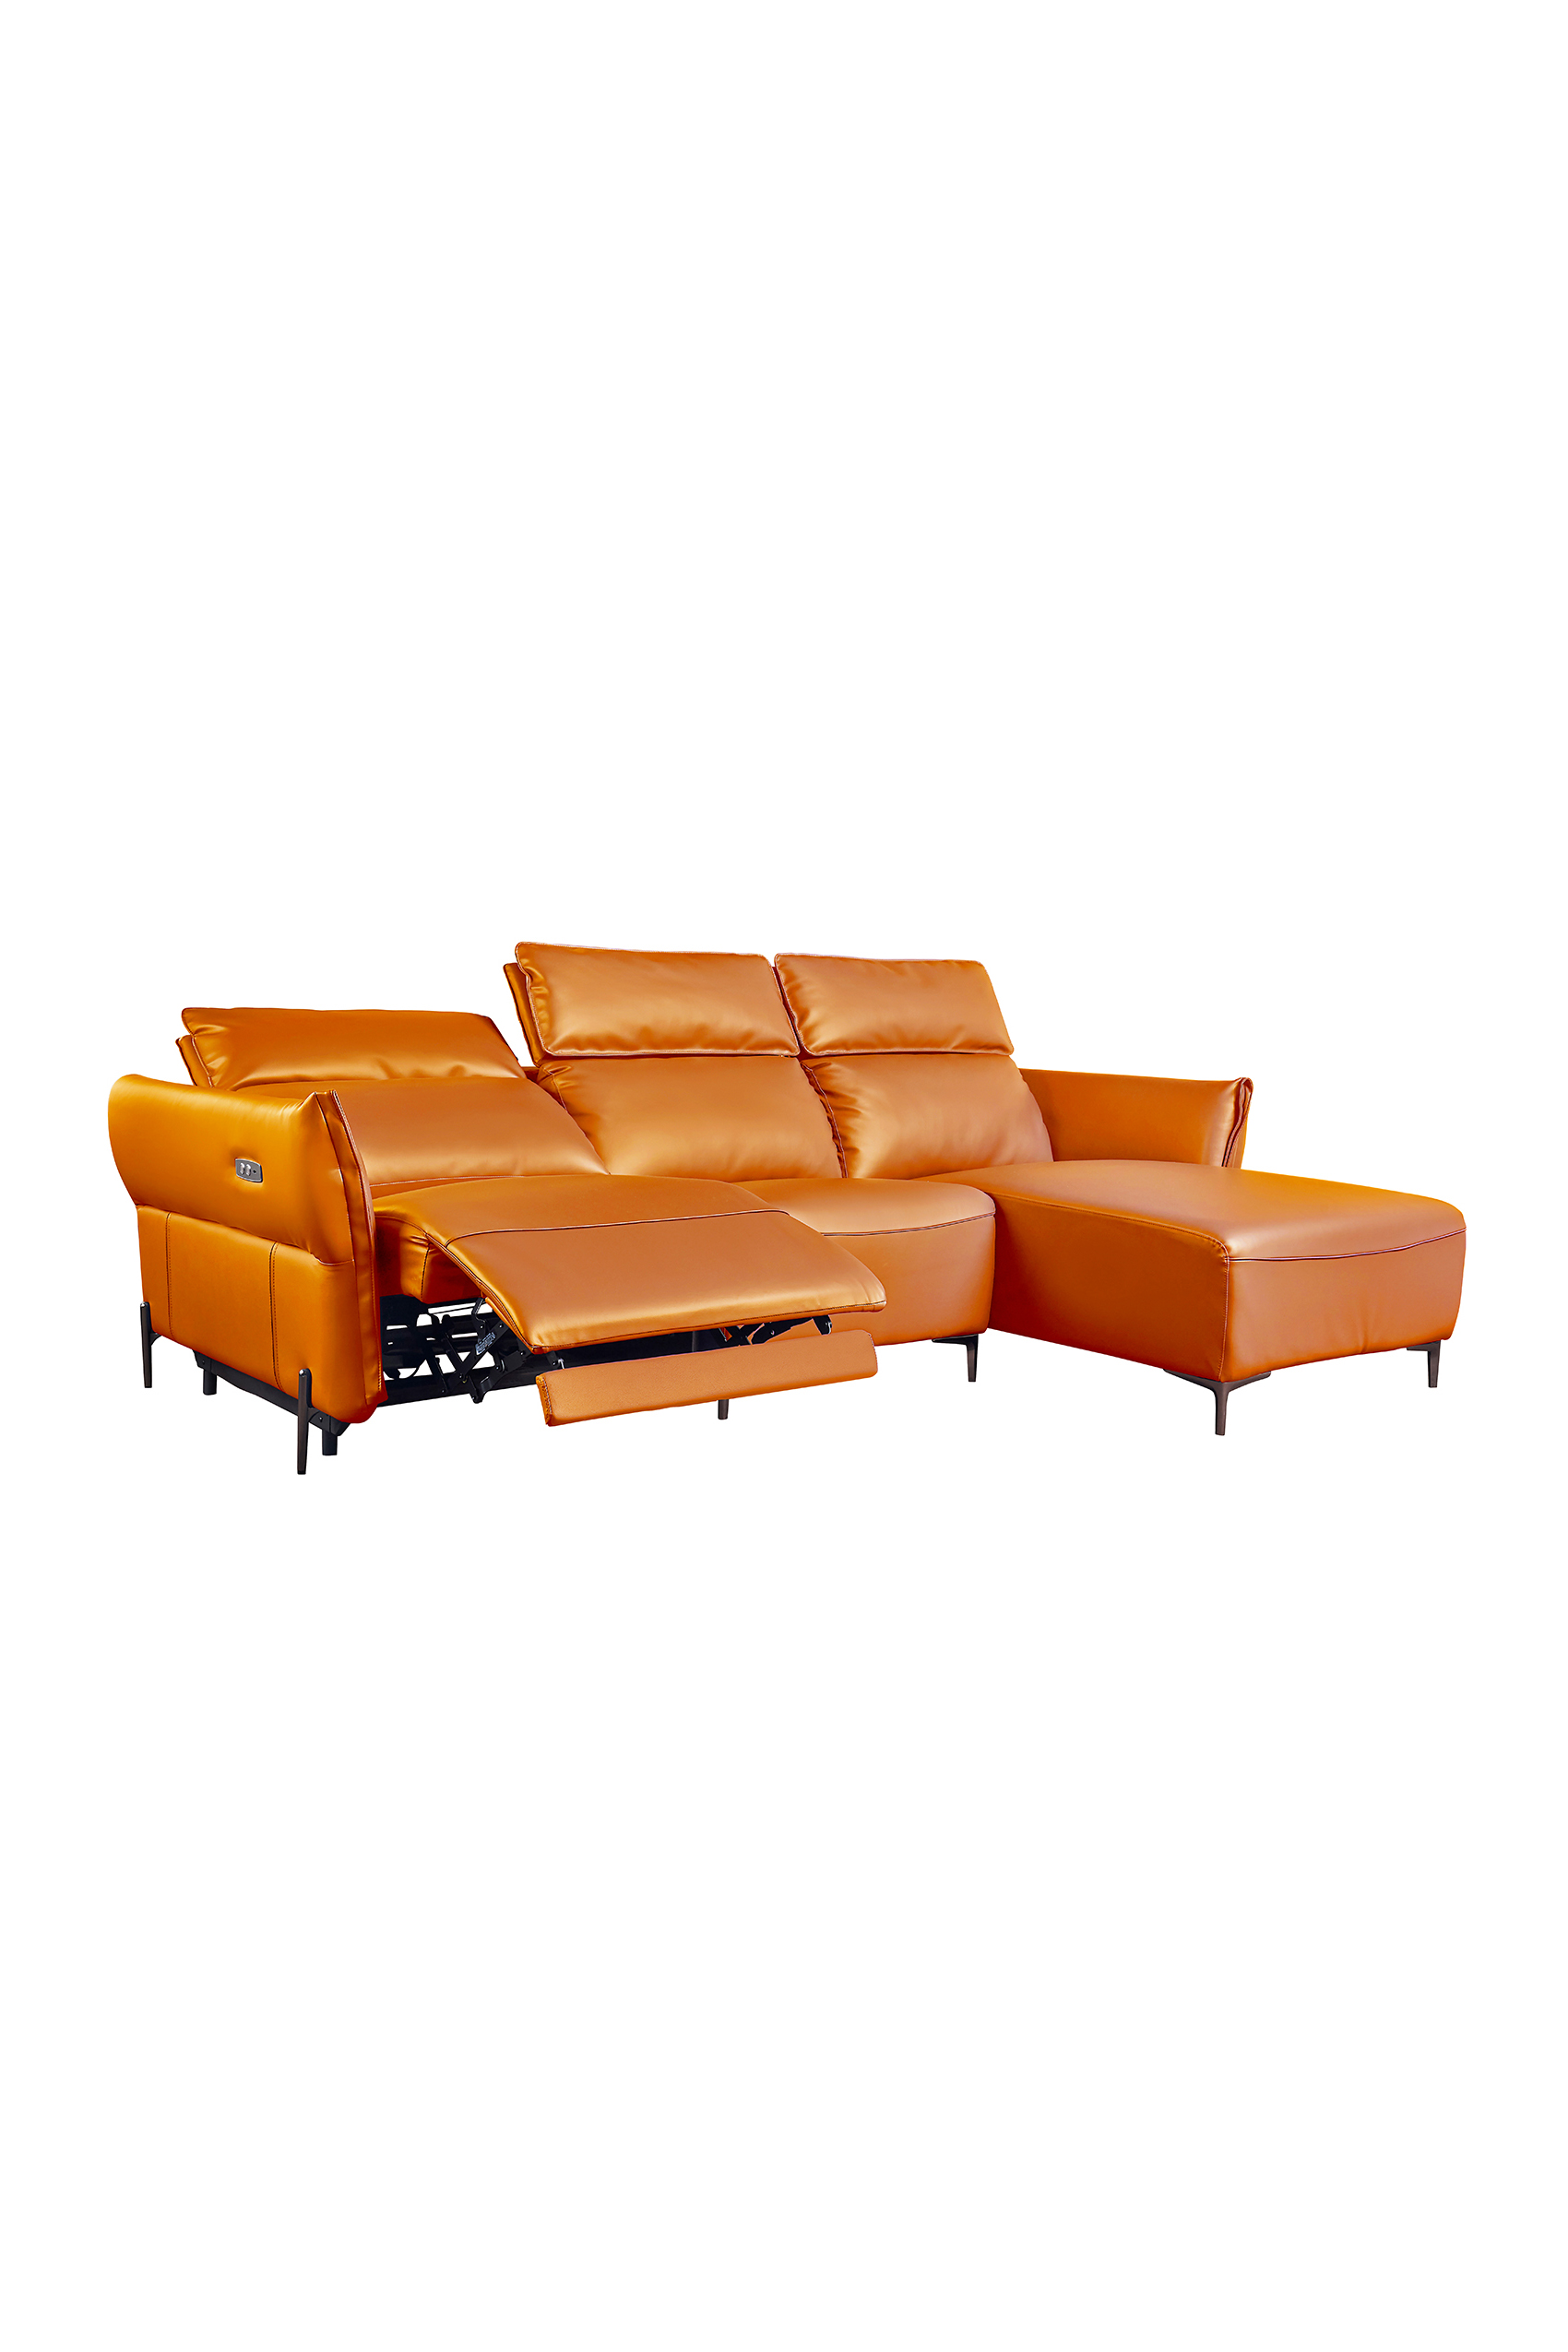 Sarnano Leather Sofa